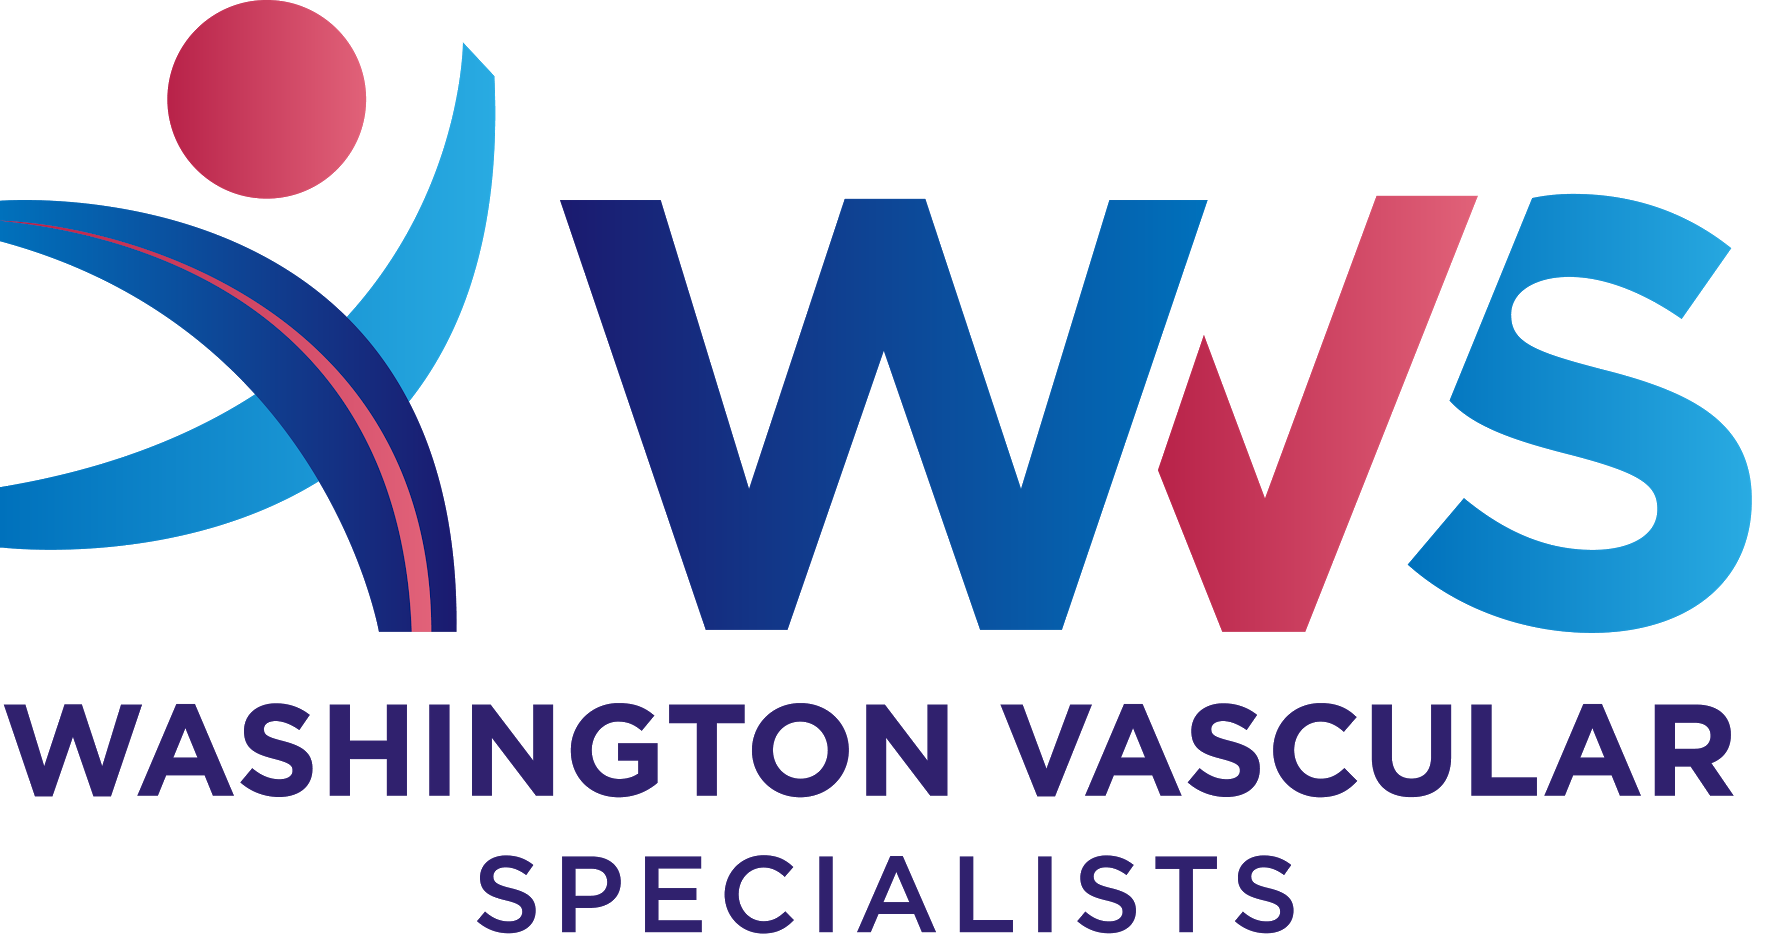 Washington Vascular Specialists Logo